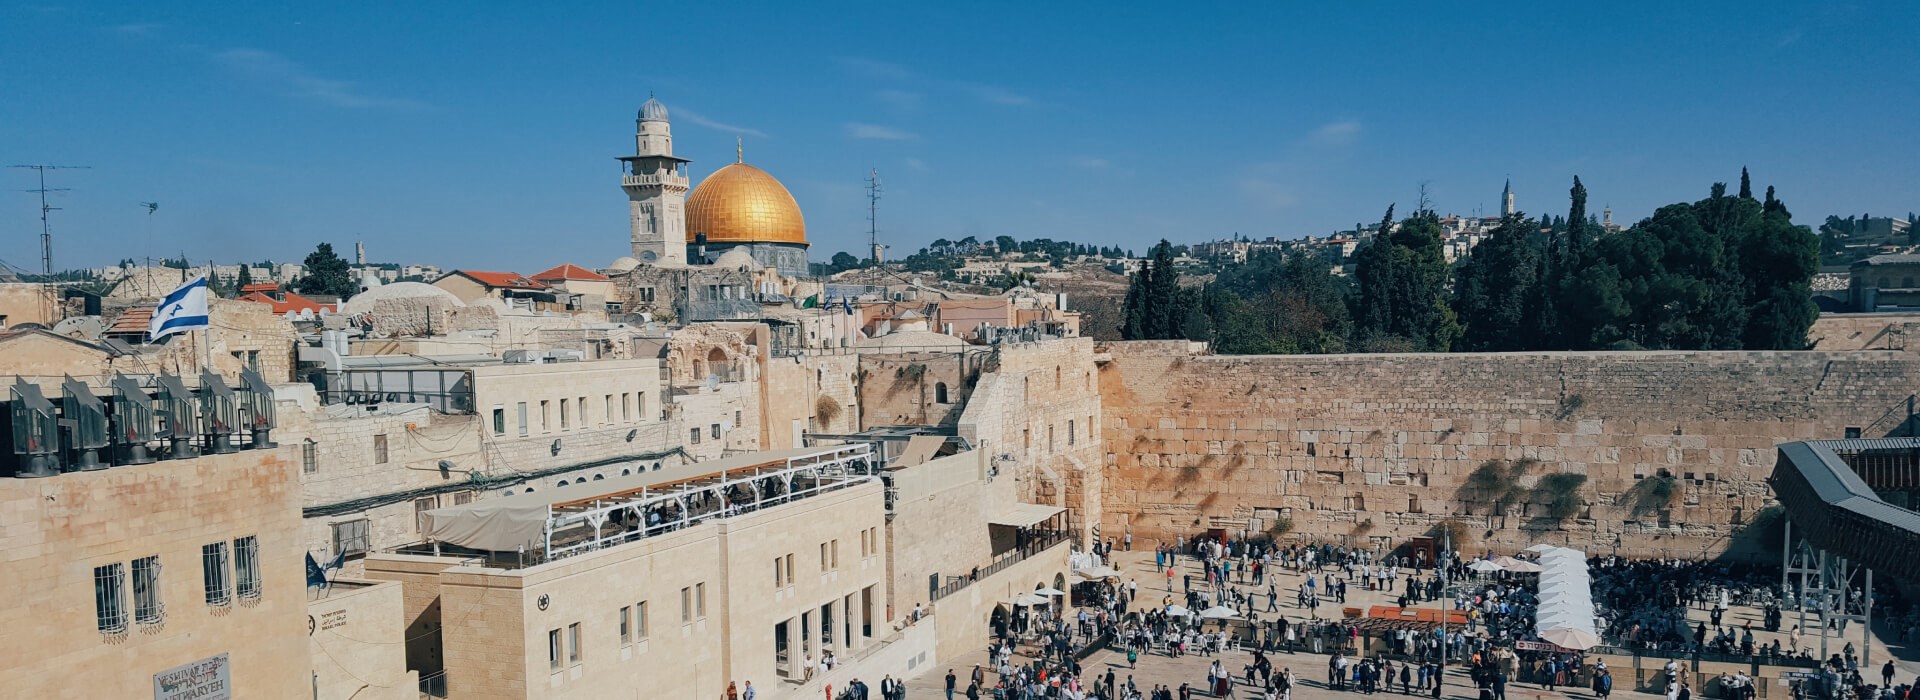 Jerusalem Gates Hotel - Request cancellation form